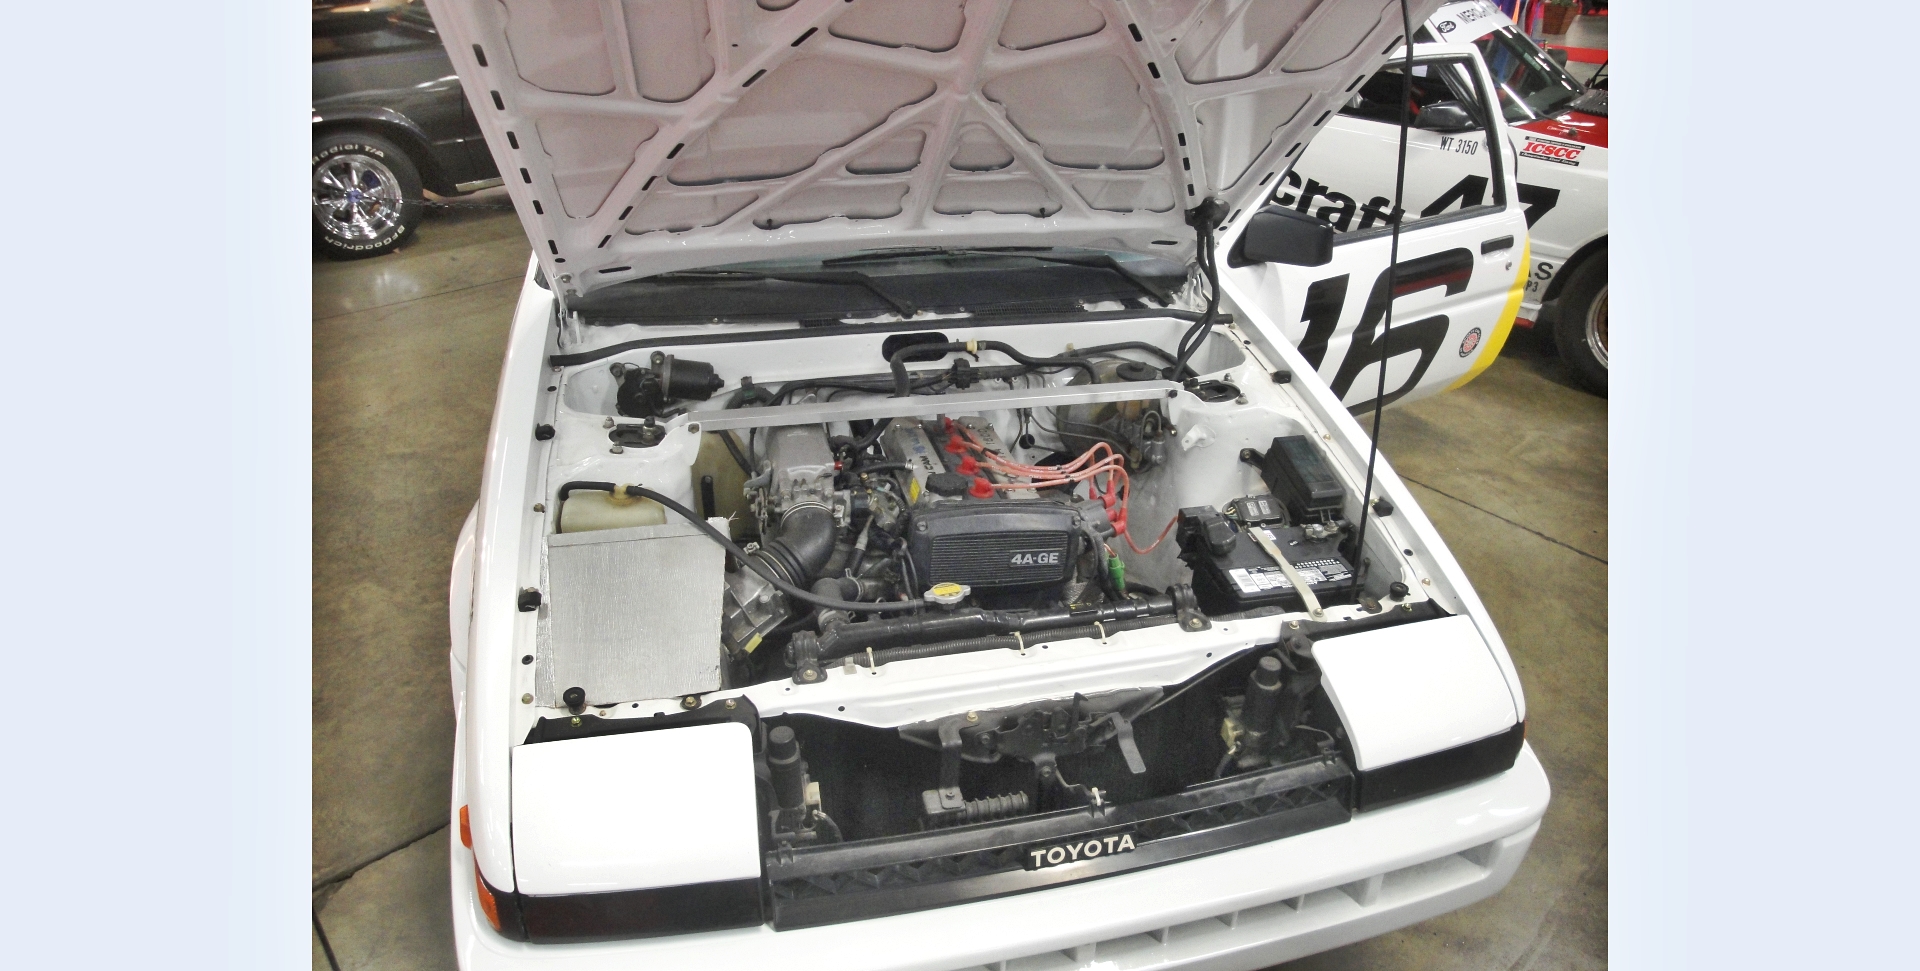 [Image: AEU86 AE86 - Racecar: TRD USA built ITA AE86]